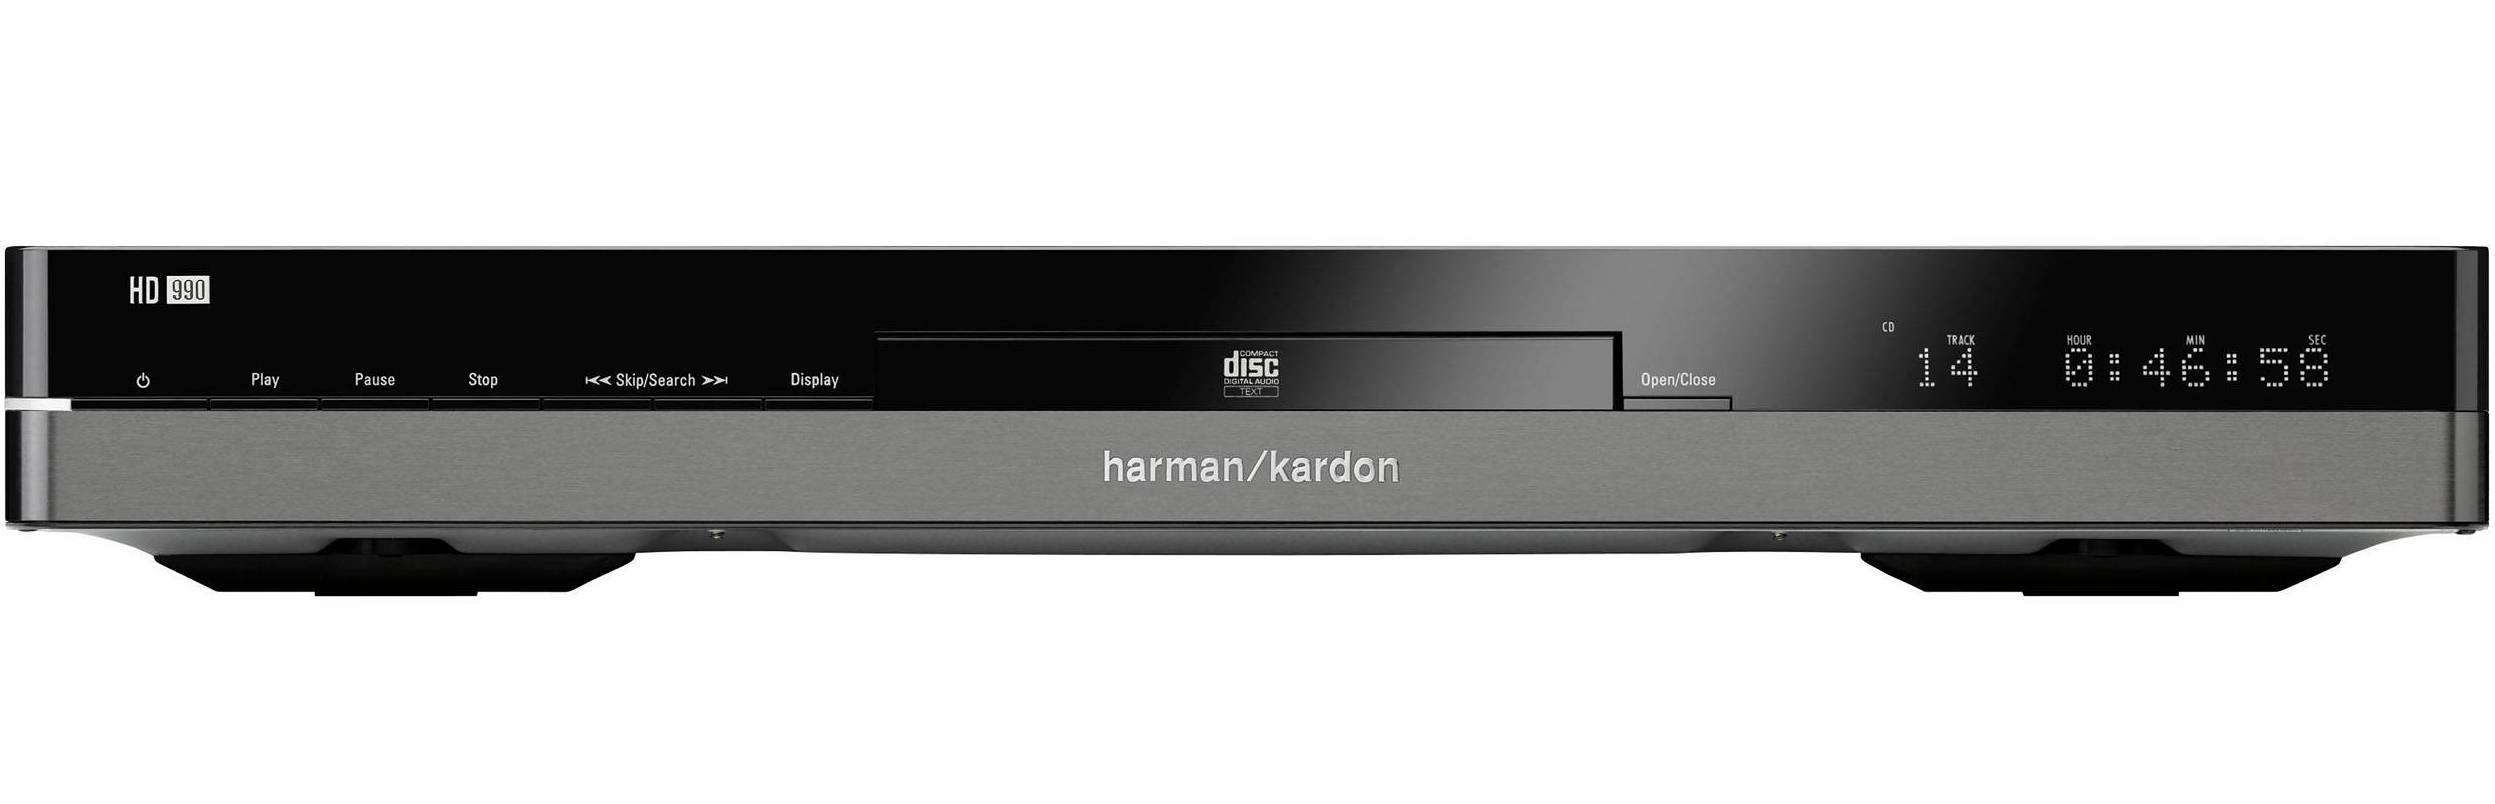 Harman Kardon HD-990-2011.jpg